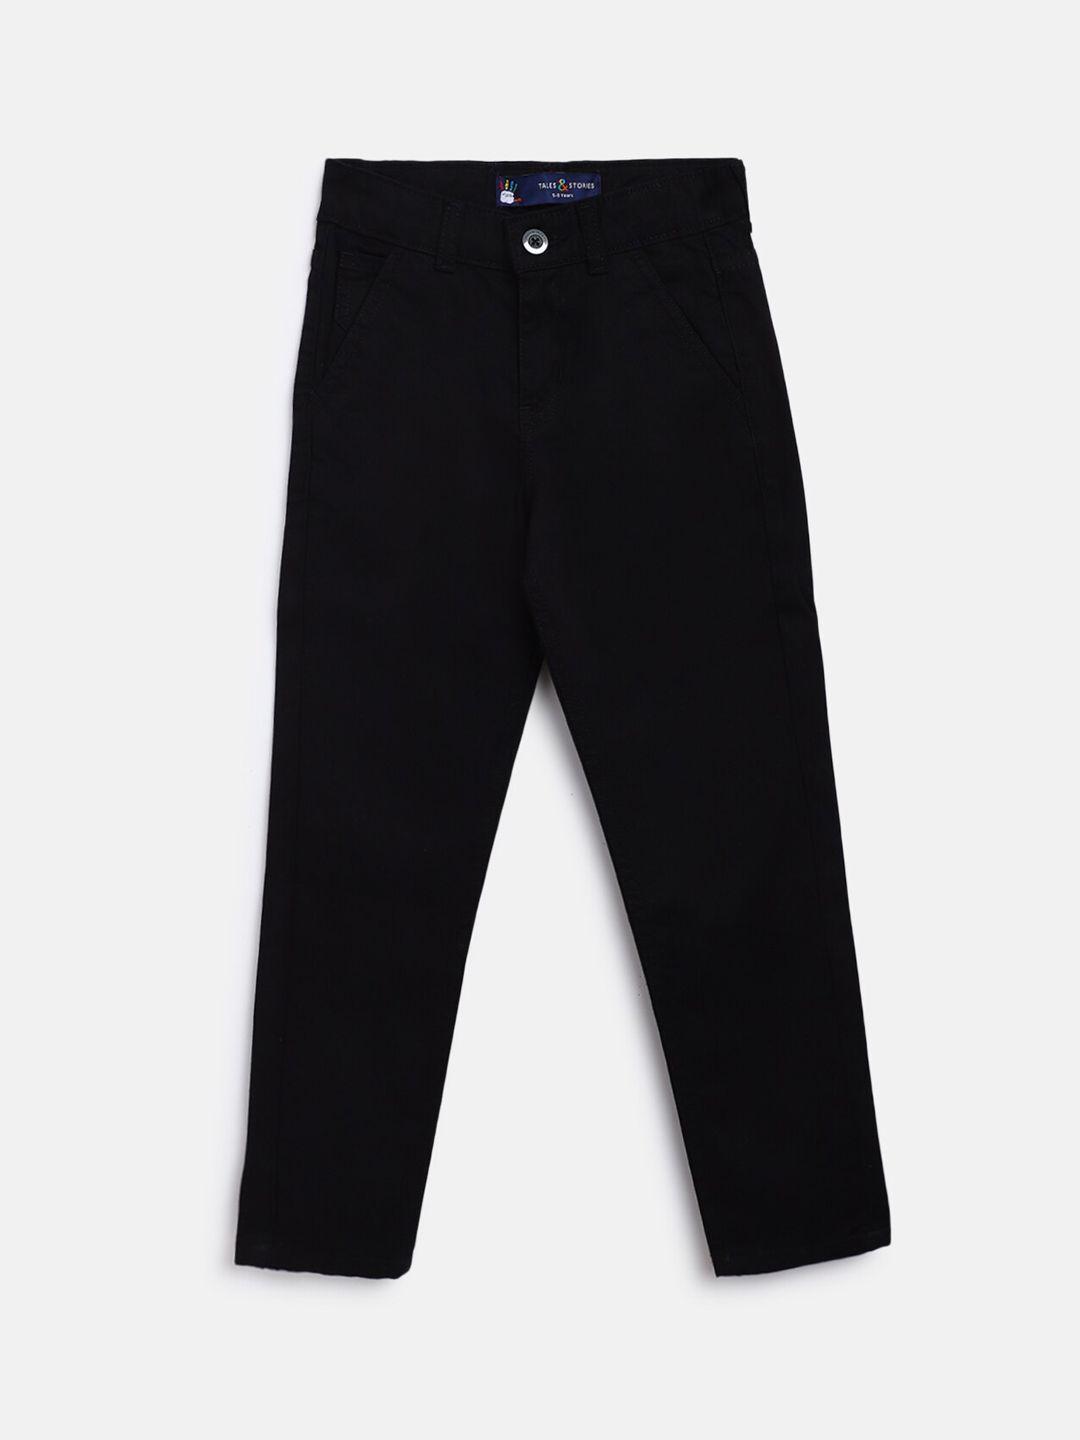 tales-&-stories-boys-black-slim-fit-chinos-trouser